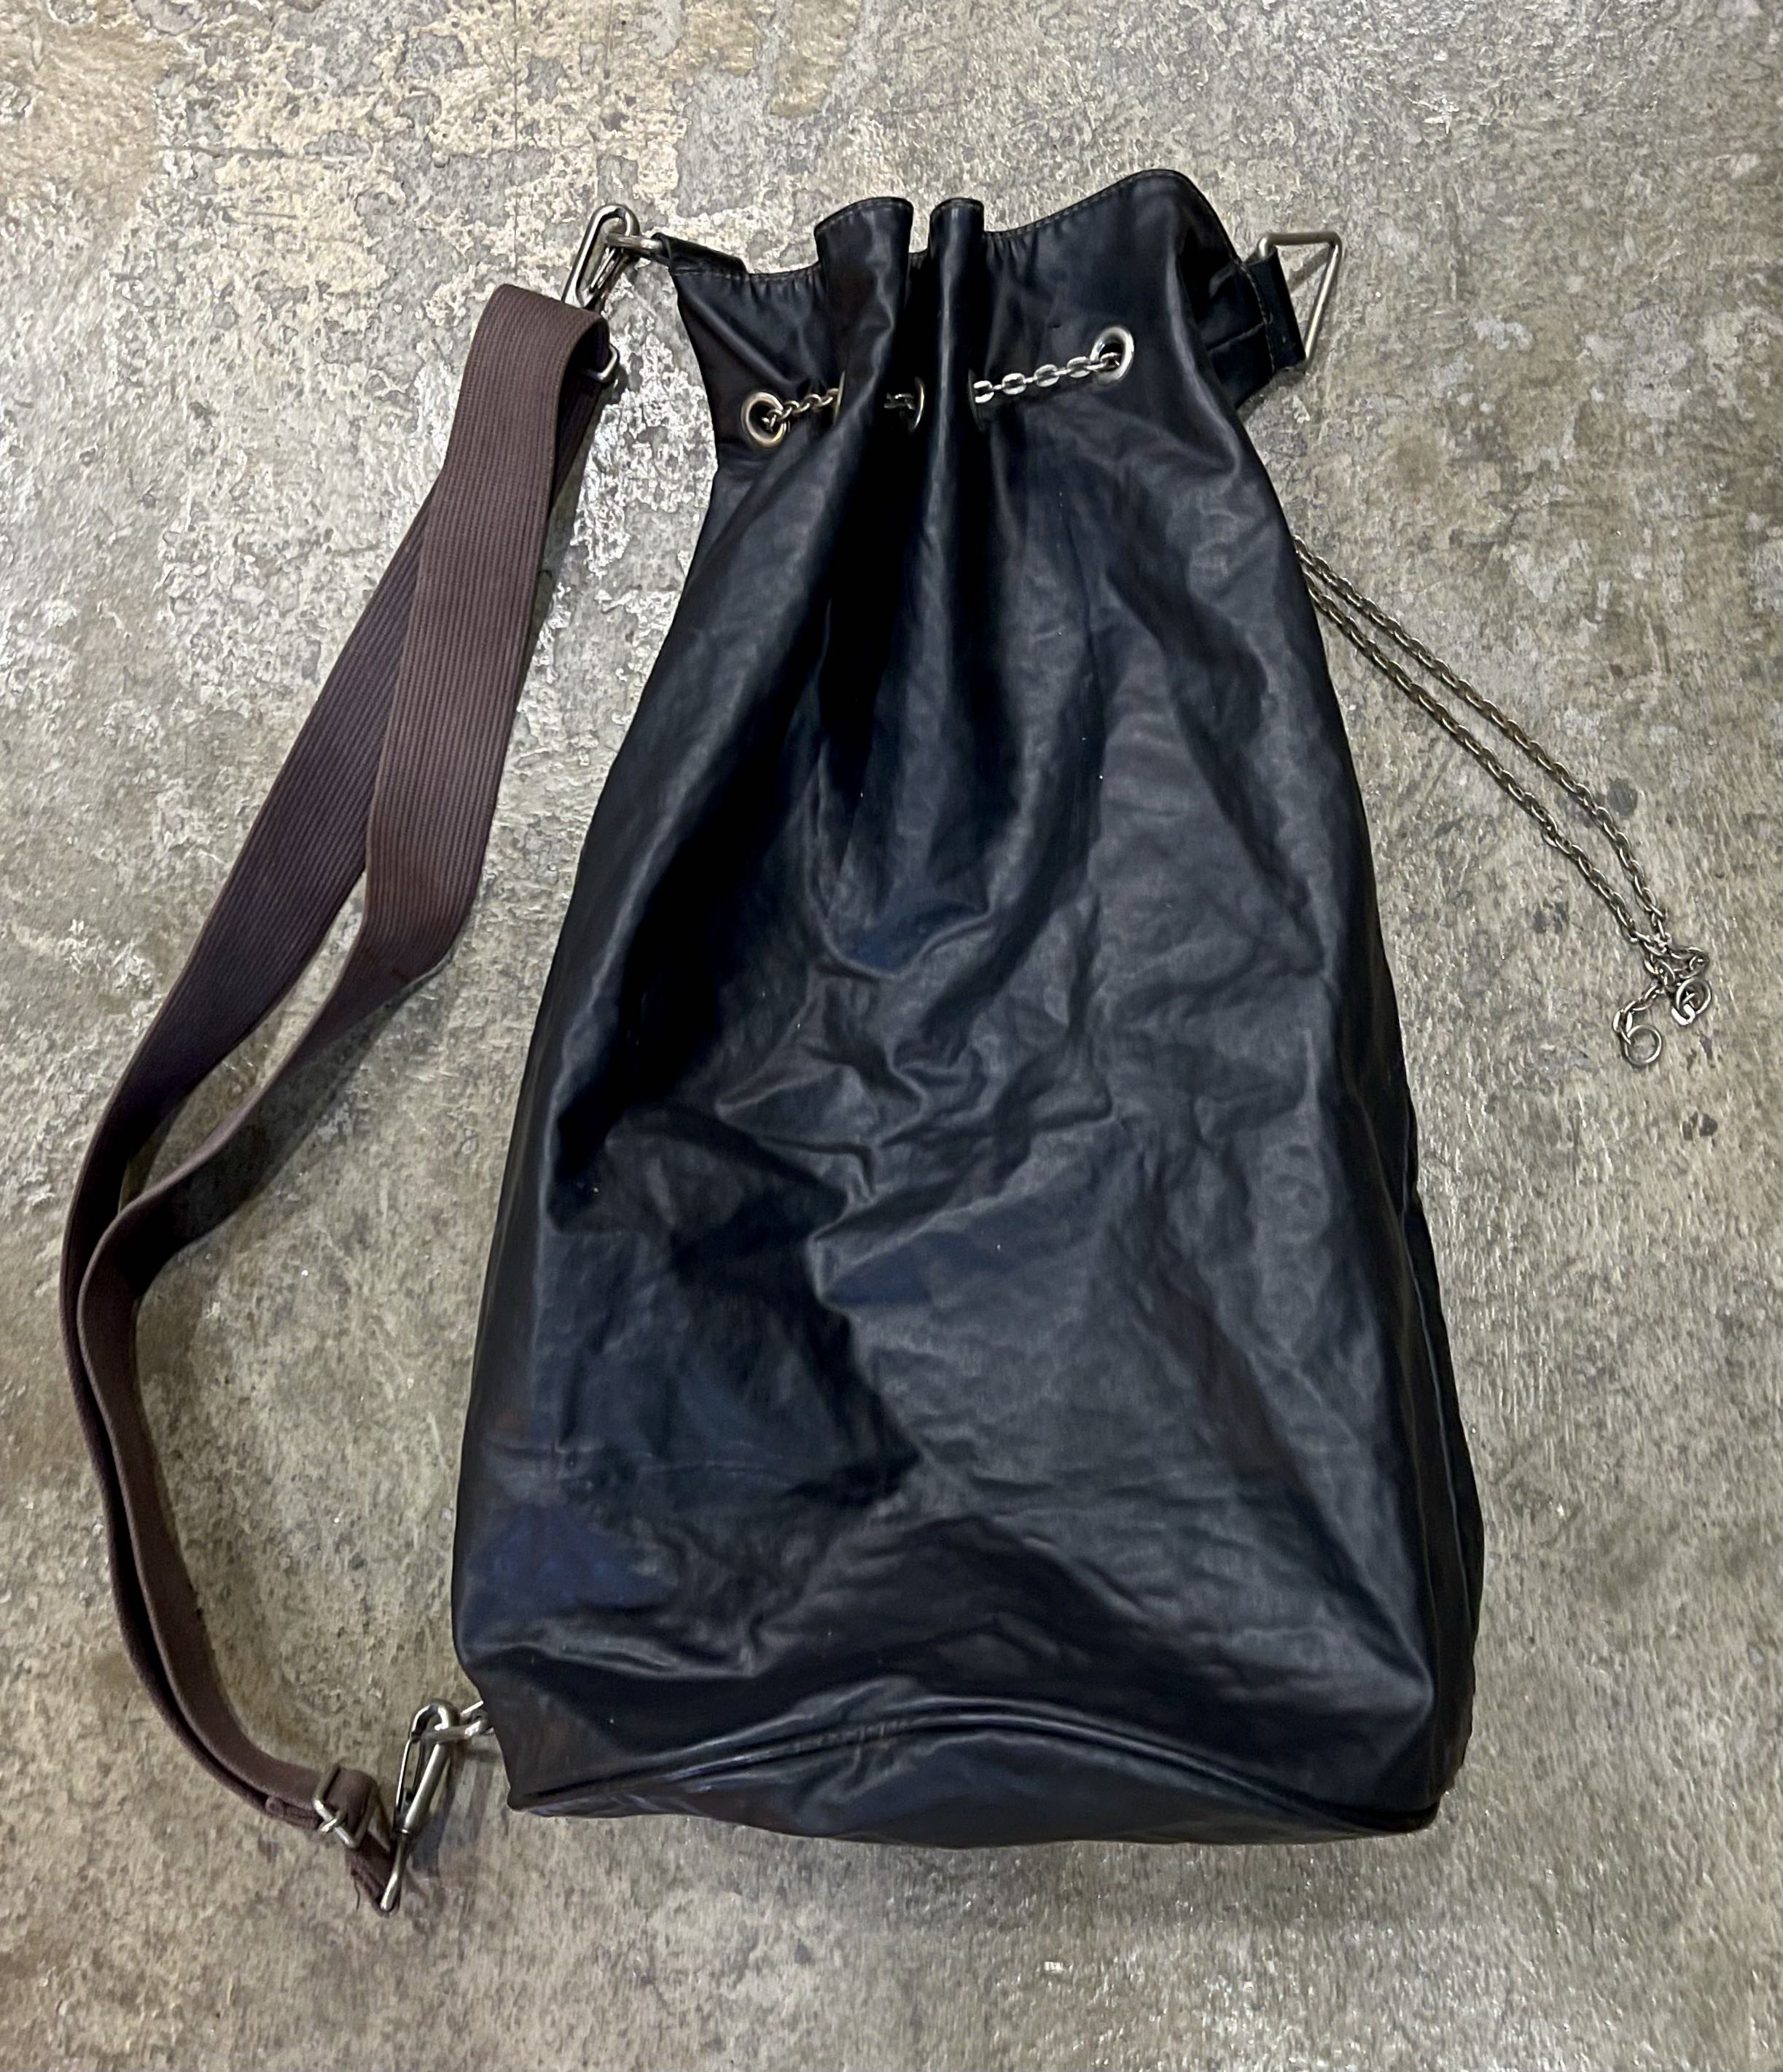 archive Jean Paul Gaultier lether bag